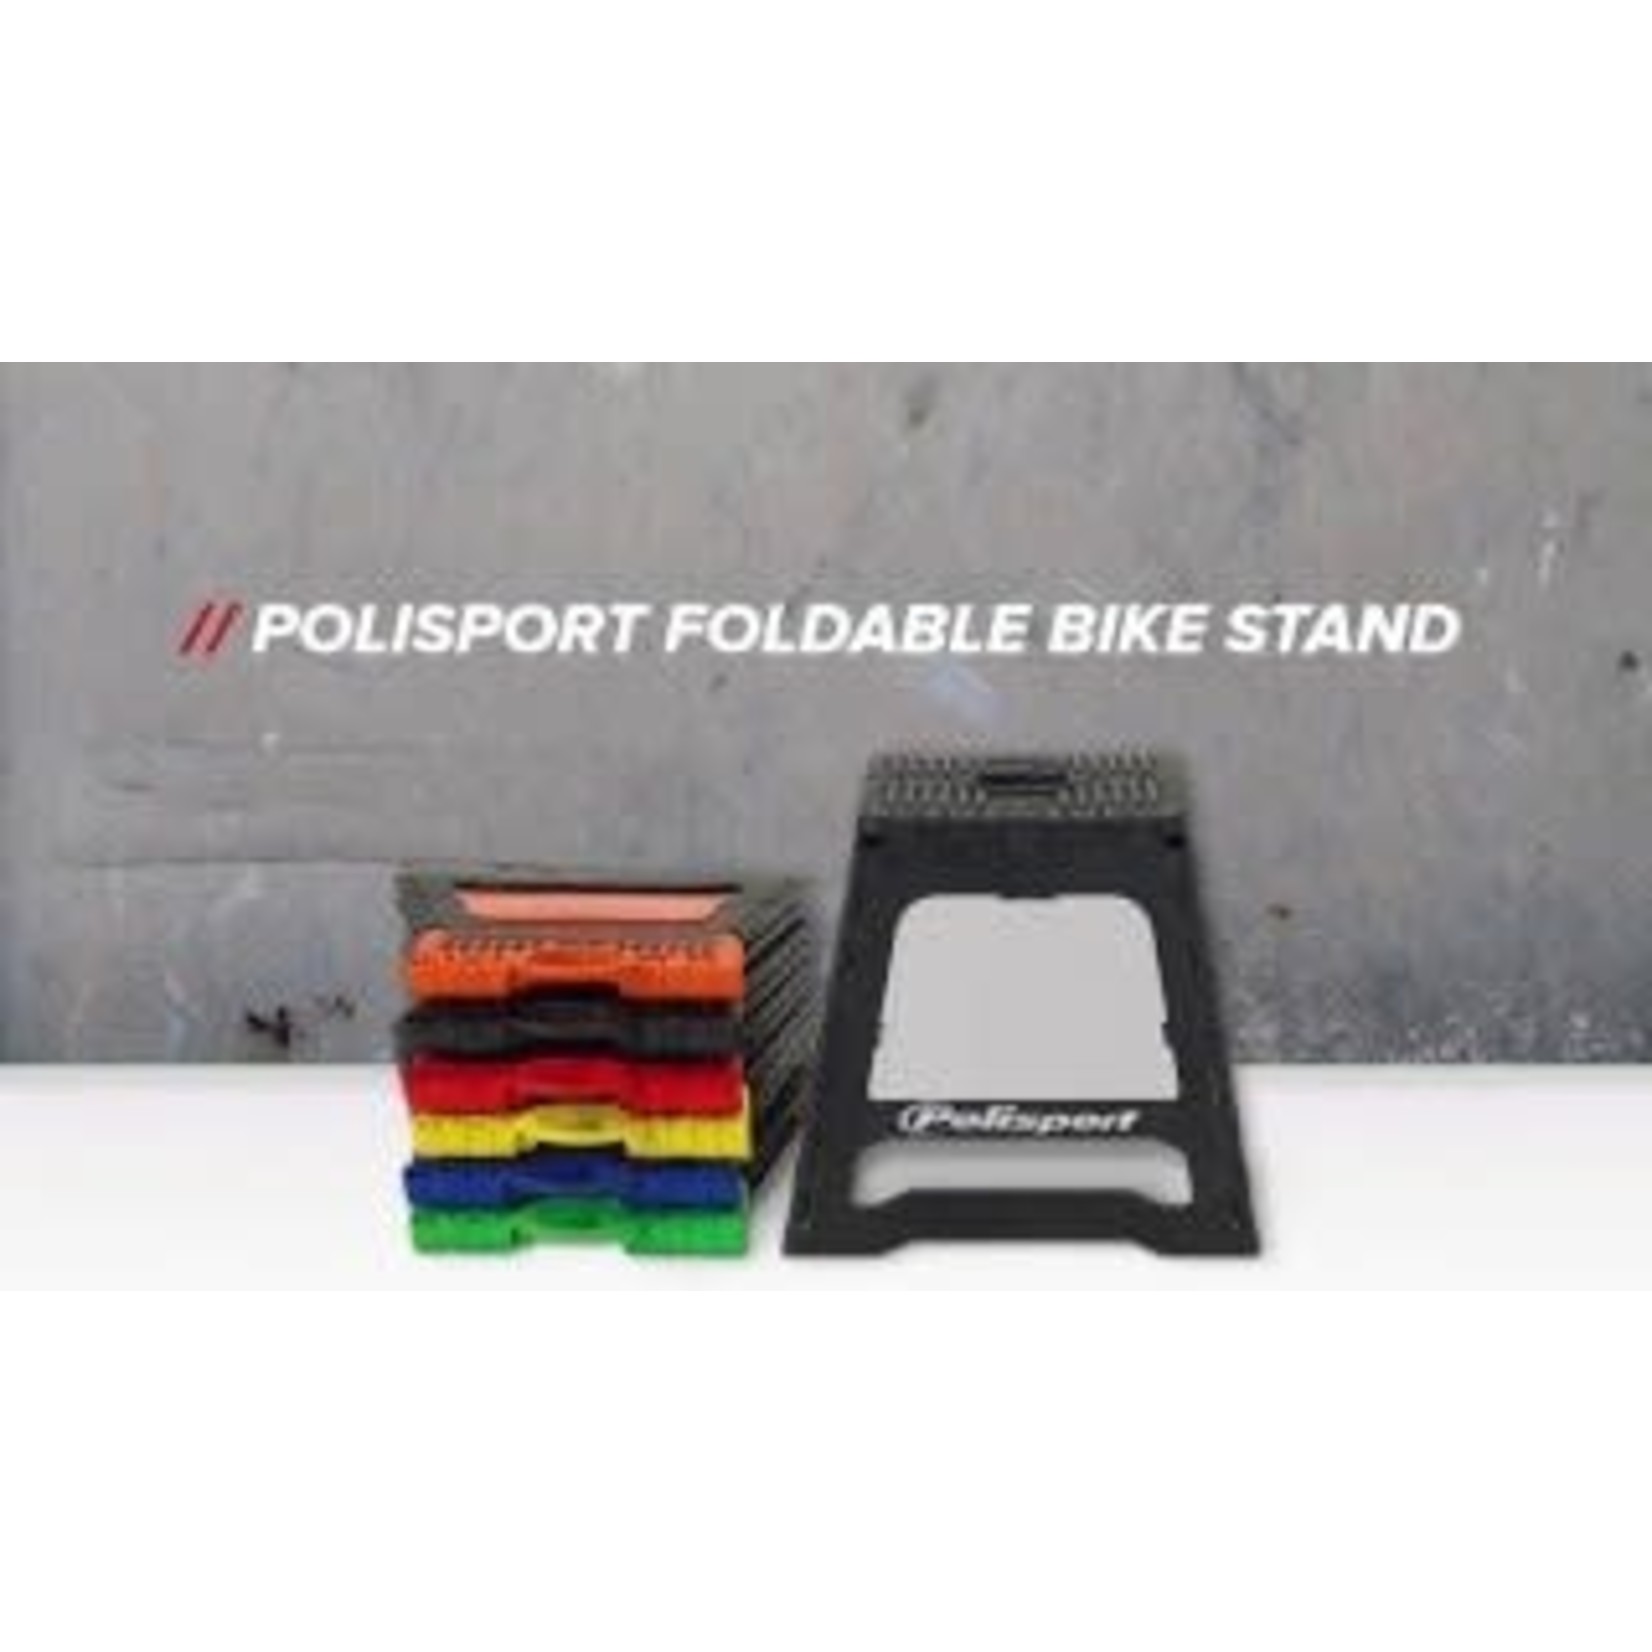 POLISPORT PoliSport Foldable Bike Stand